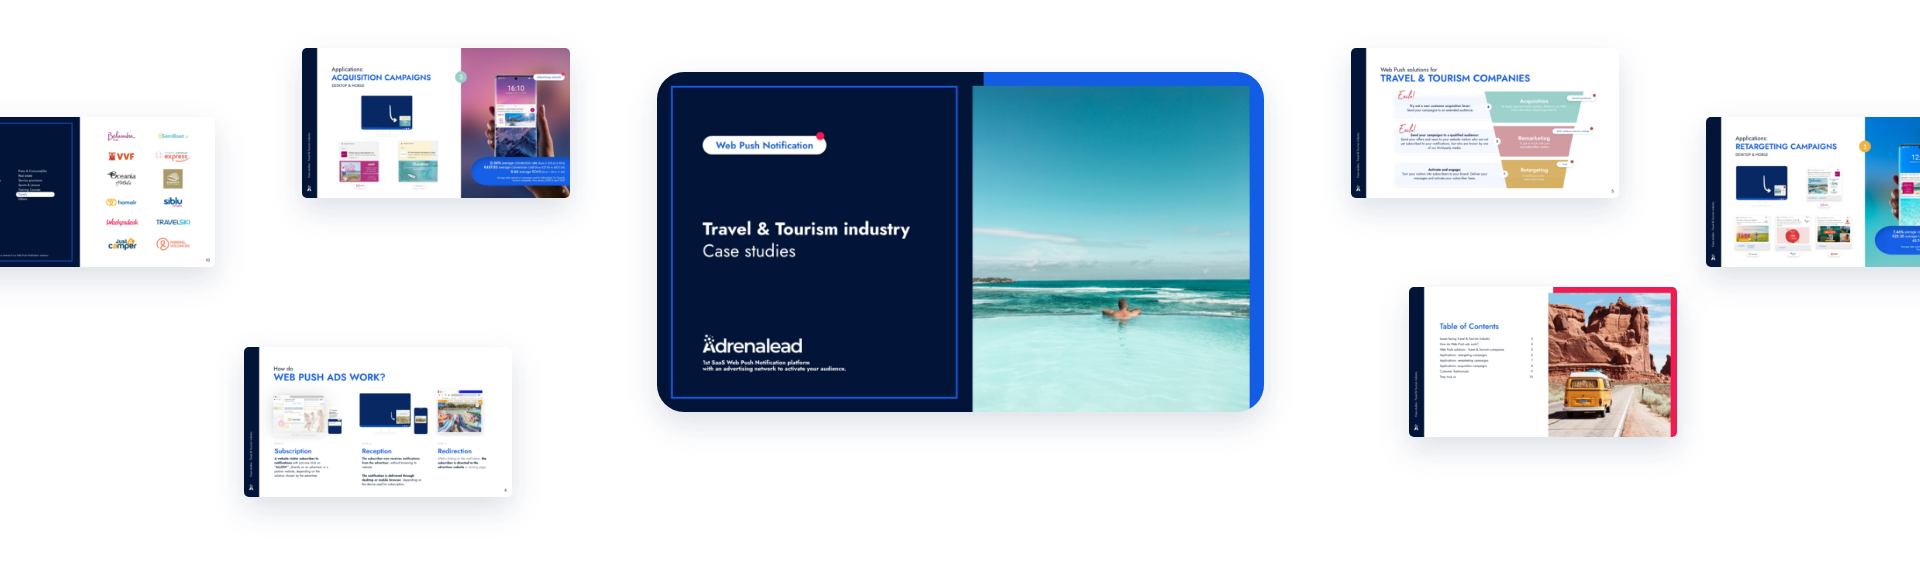 Acquisition loyalty tourism use case